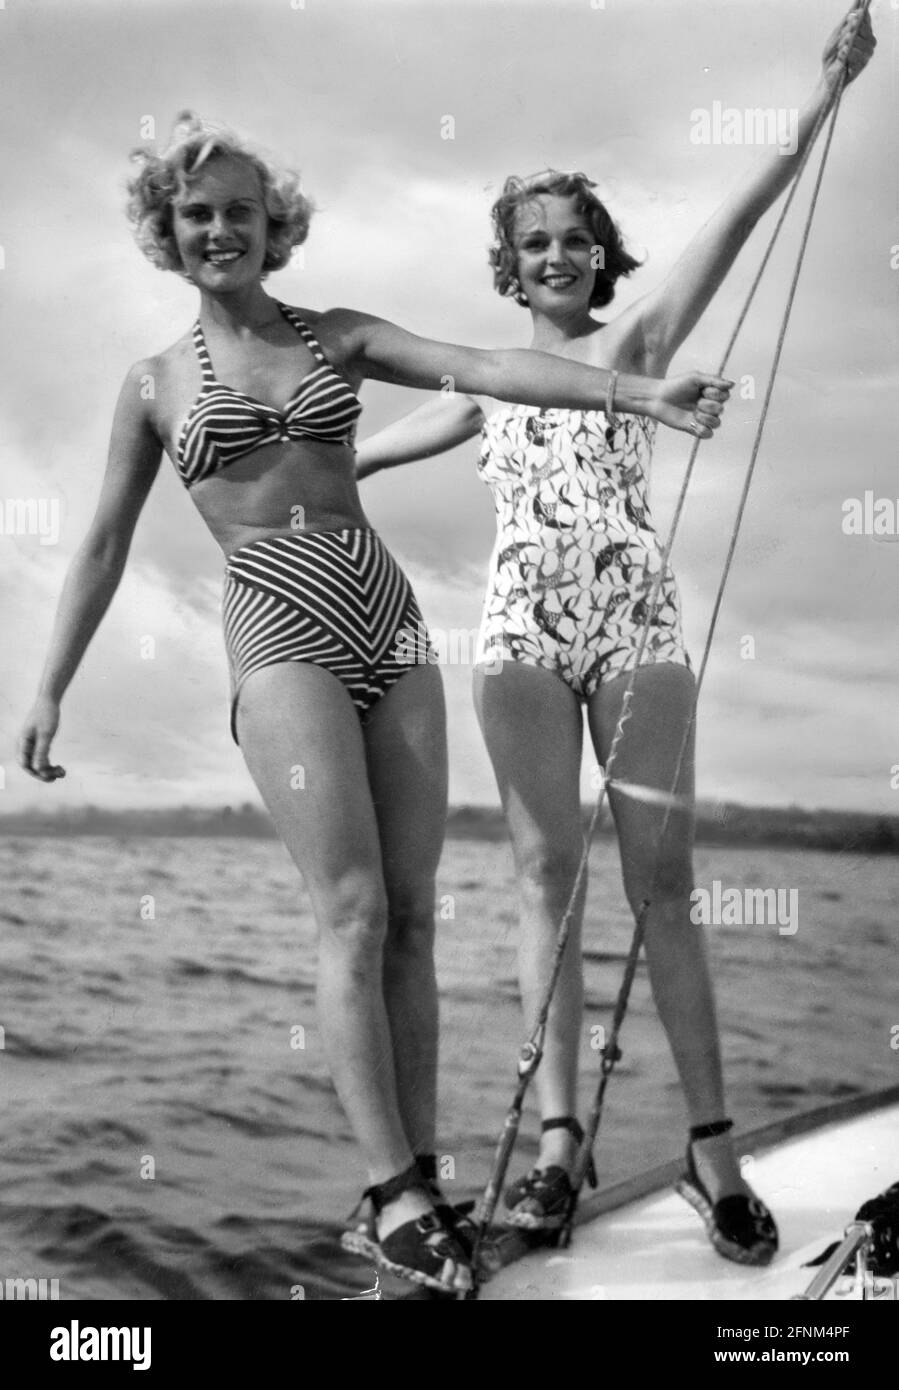 Garderobe Ga terug Stier Bathing suit 1950's Black and White Stock Photos & Images - Alamy